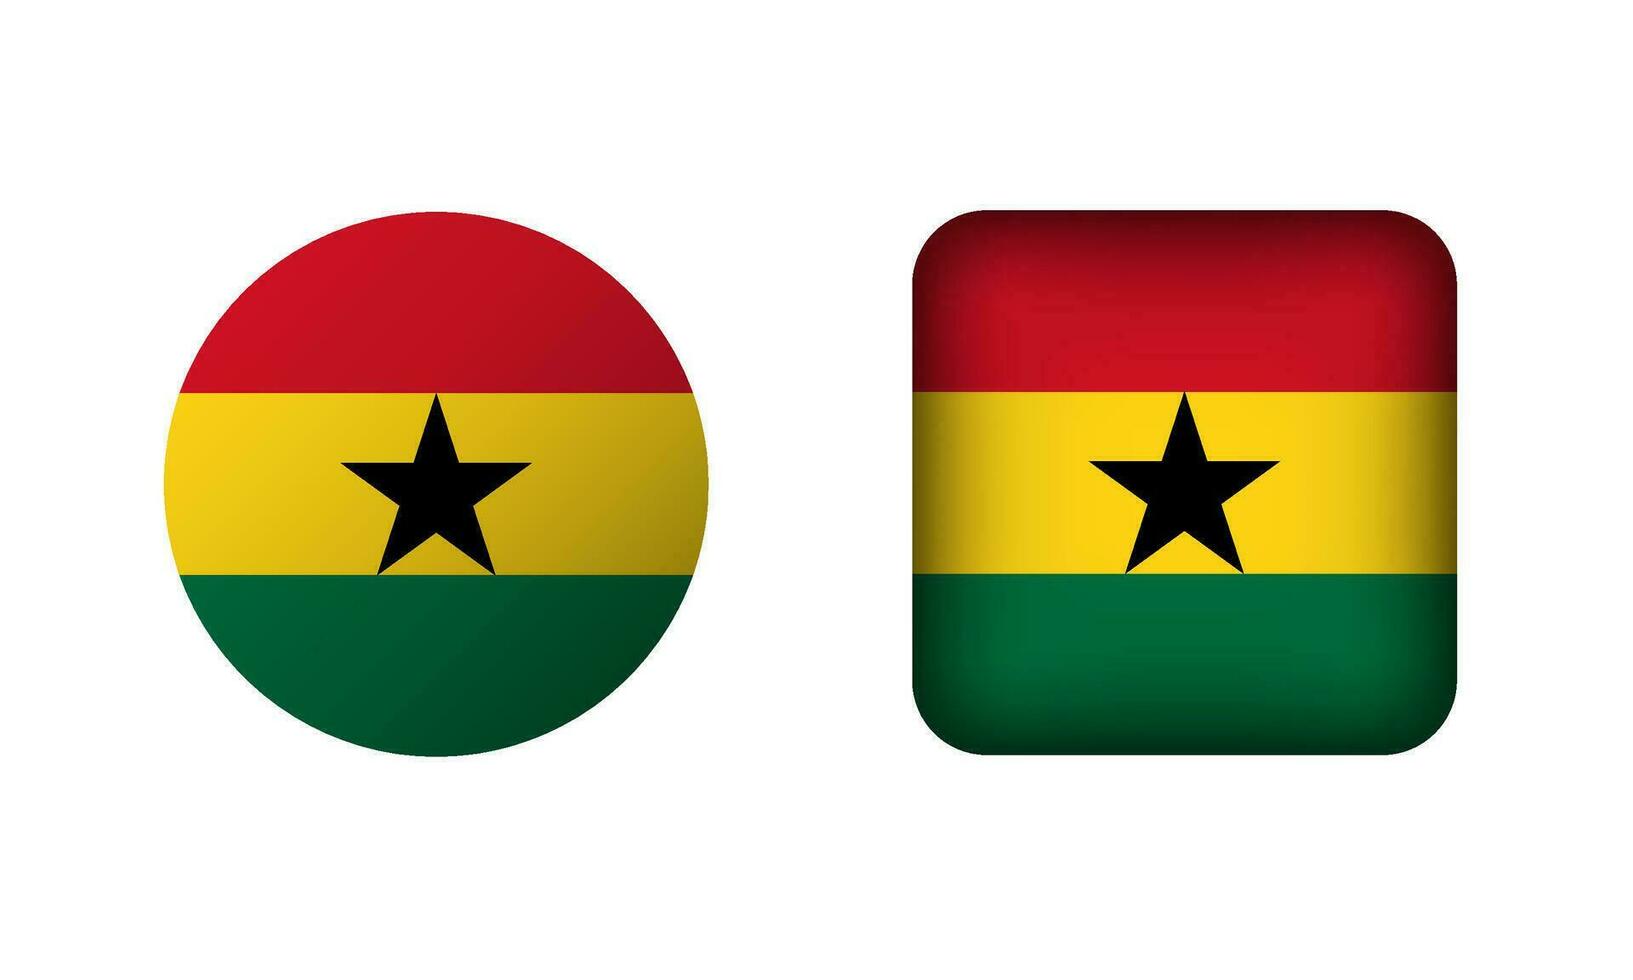 Flat Square and Circle Ghana National Flag Icons vector